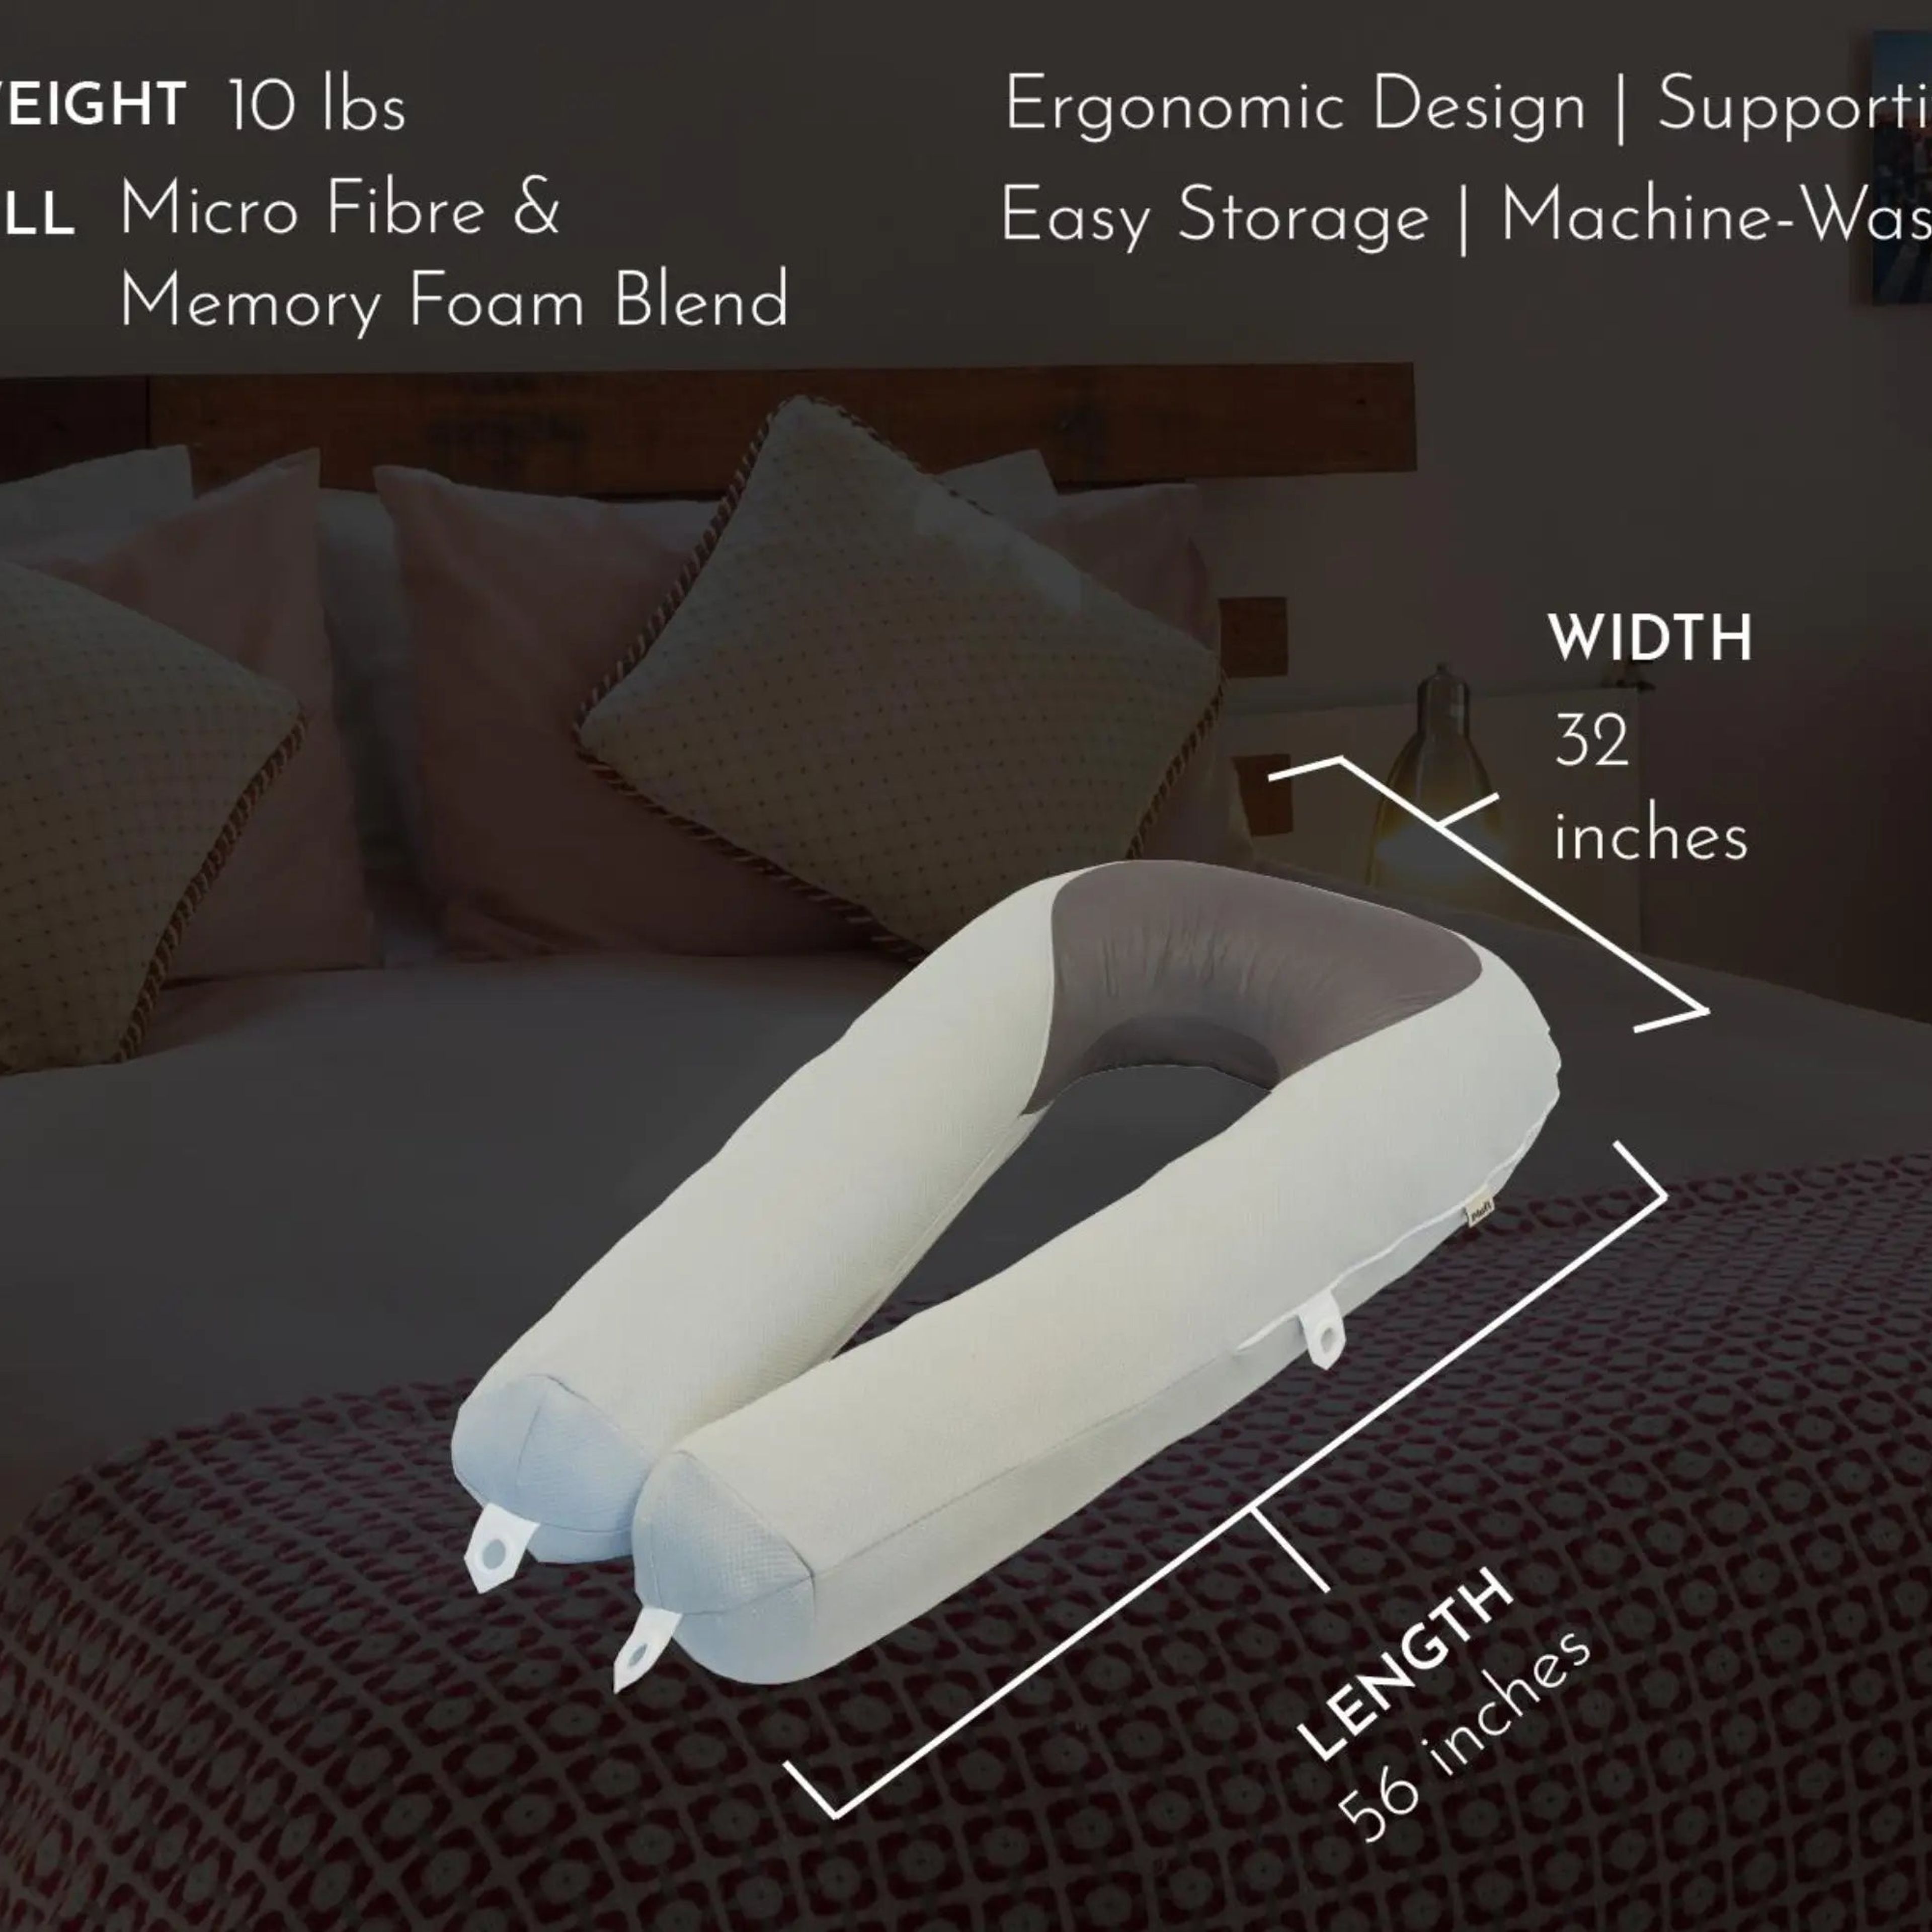 Hugl Cooling Body Pillow R